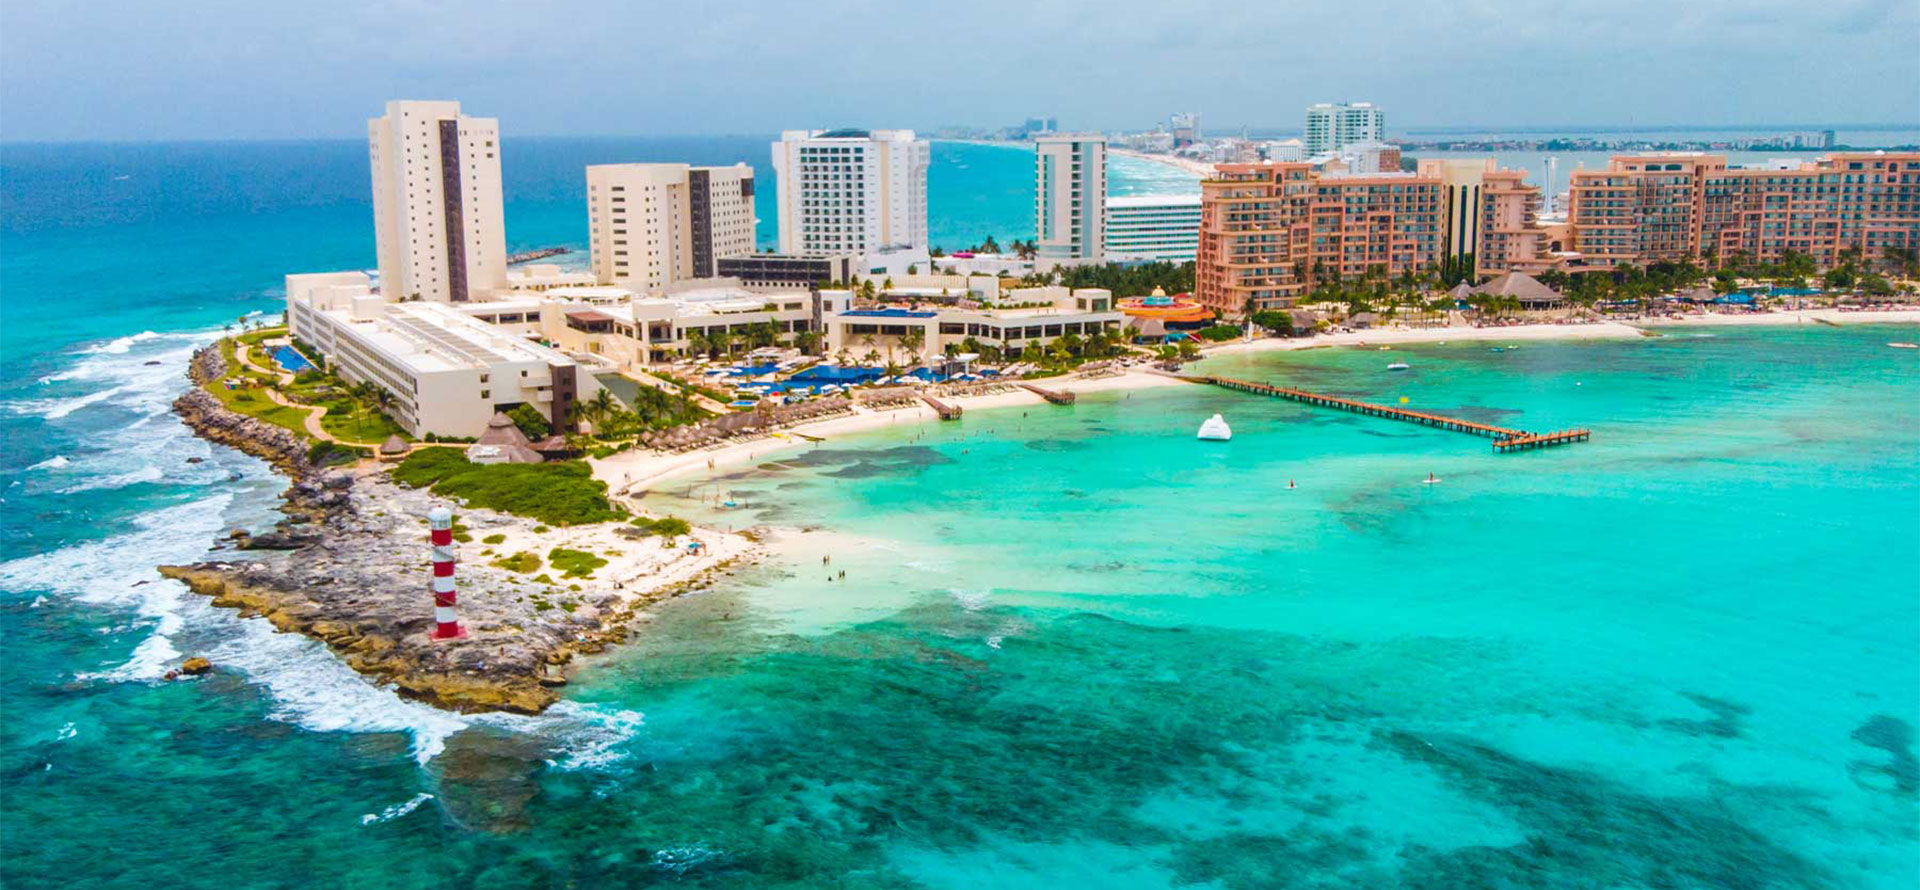 Cancun or puerto vallarta island.